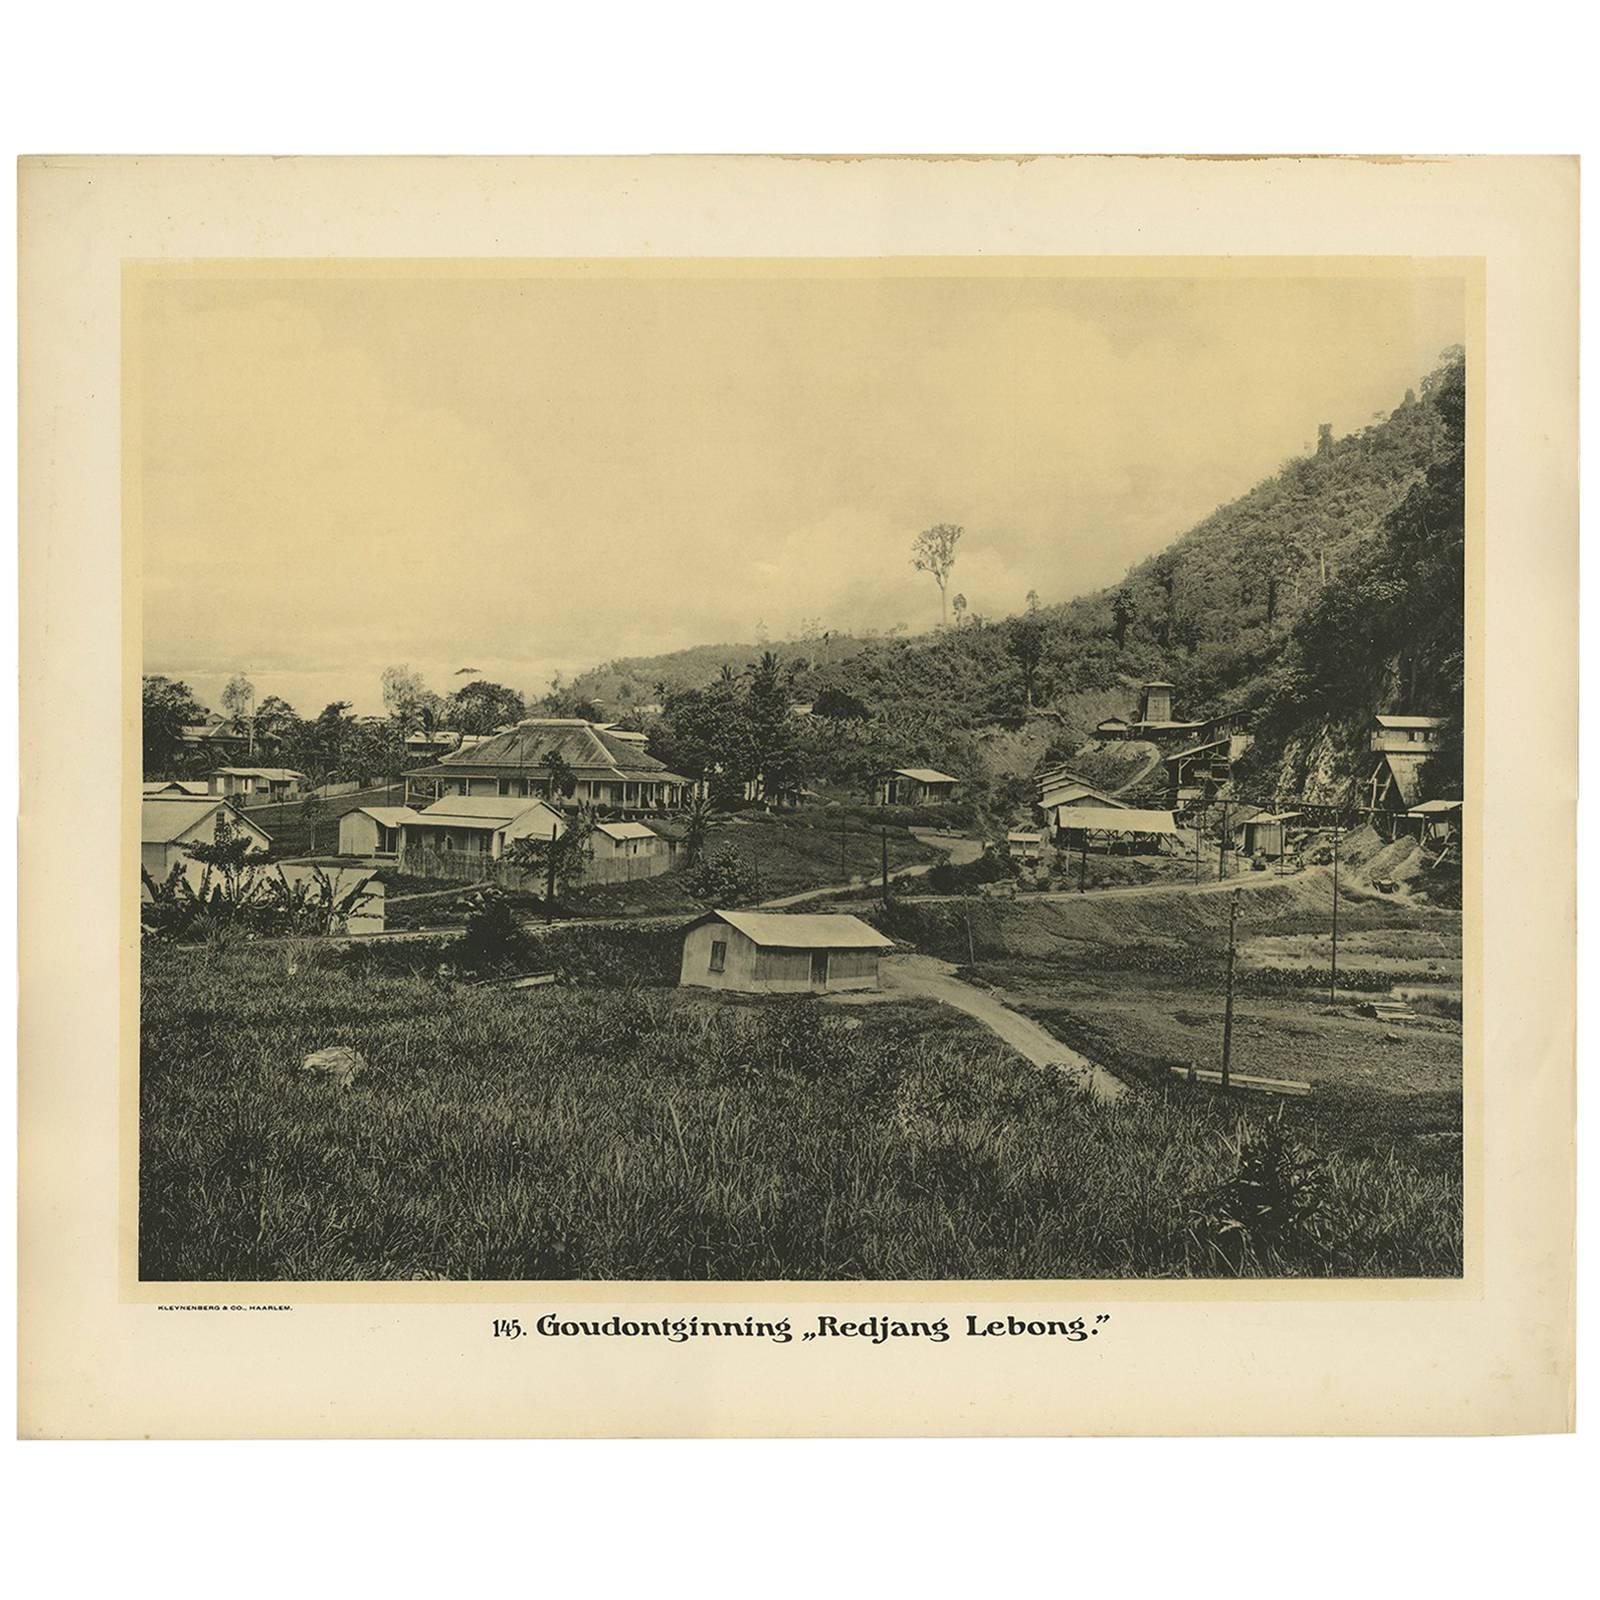 Photographic Plate Illustrating the Gold Mine ‘Redjang Lebong’ by Kleynenberg